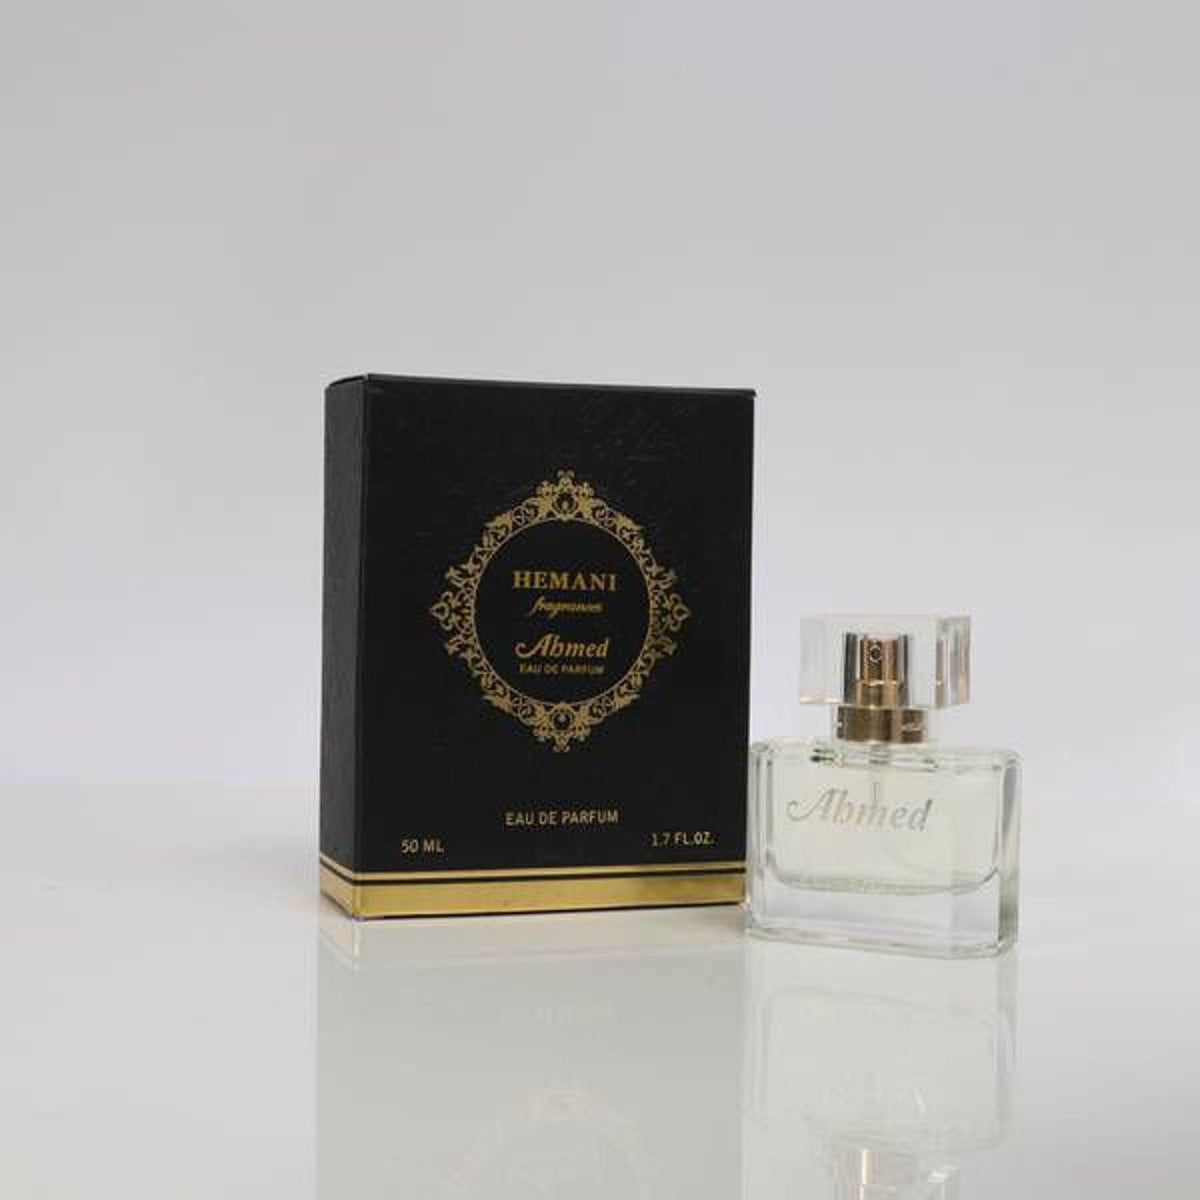 Hemani Ahmed Perfume 50Ml - Premium  from Hemani - Just Rs 700.00! Shop now at Cozmetica